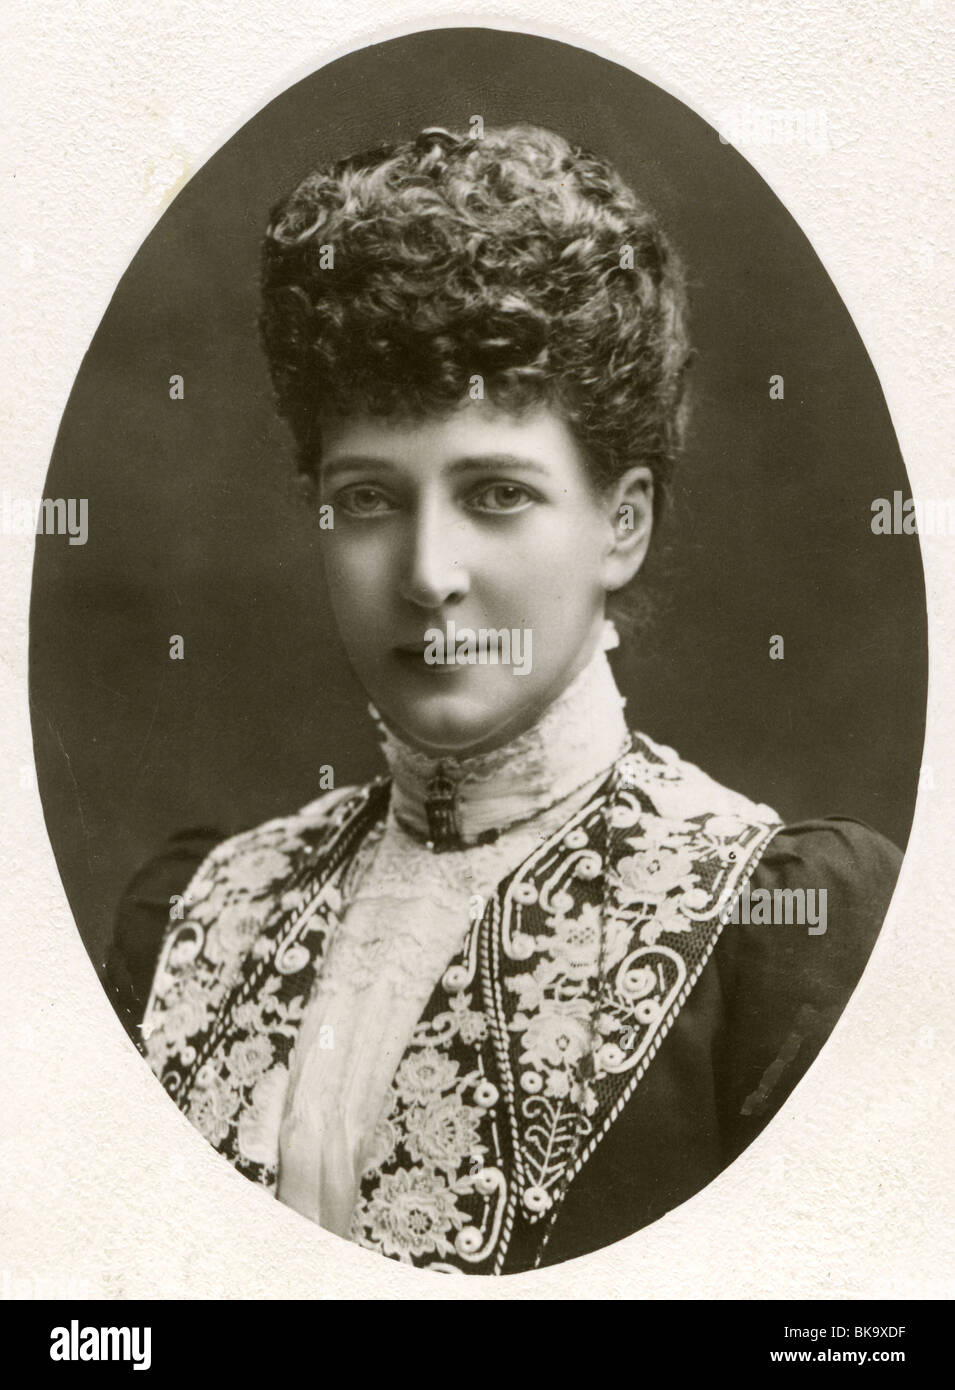 - La Reina Alexandra Alexandra de Dinamarca - consorte de Edward VII sobre 1901 Foto de stock